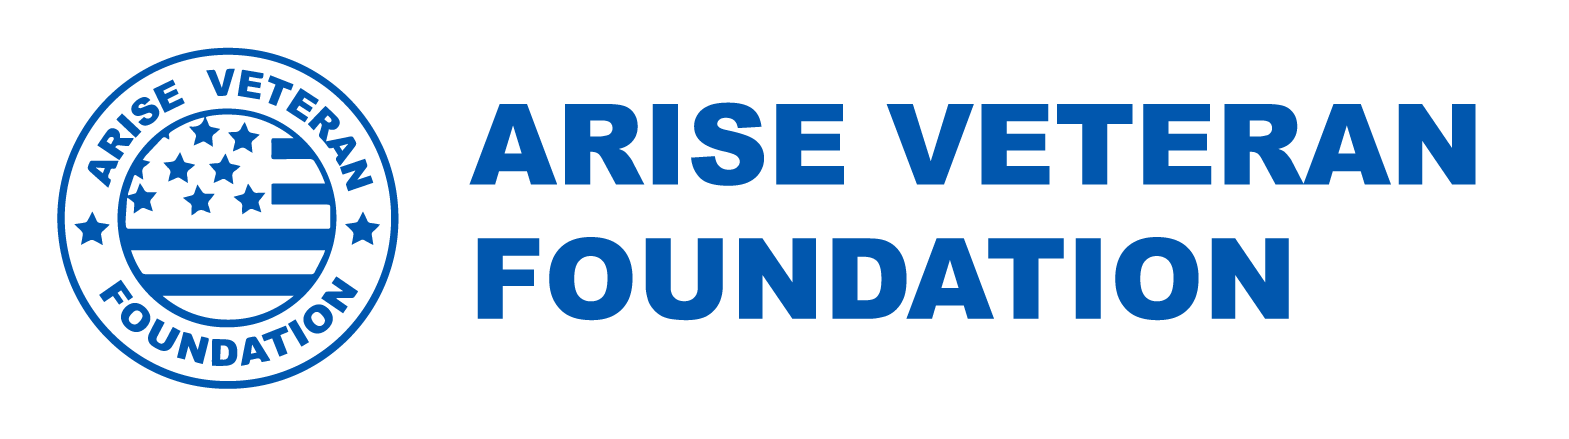 arise veteran foundation logo